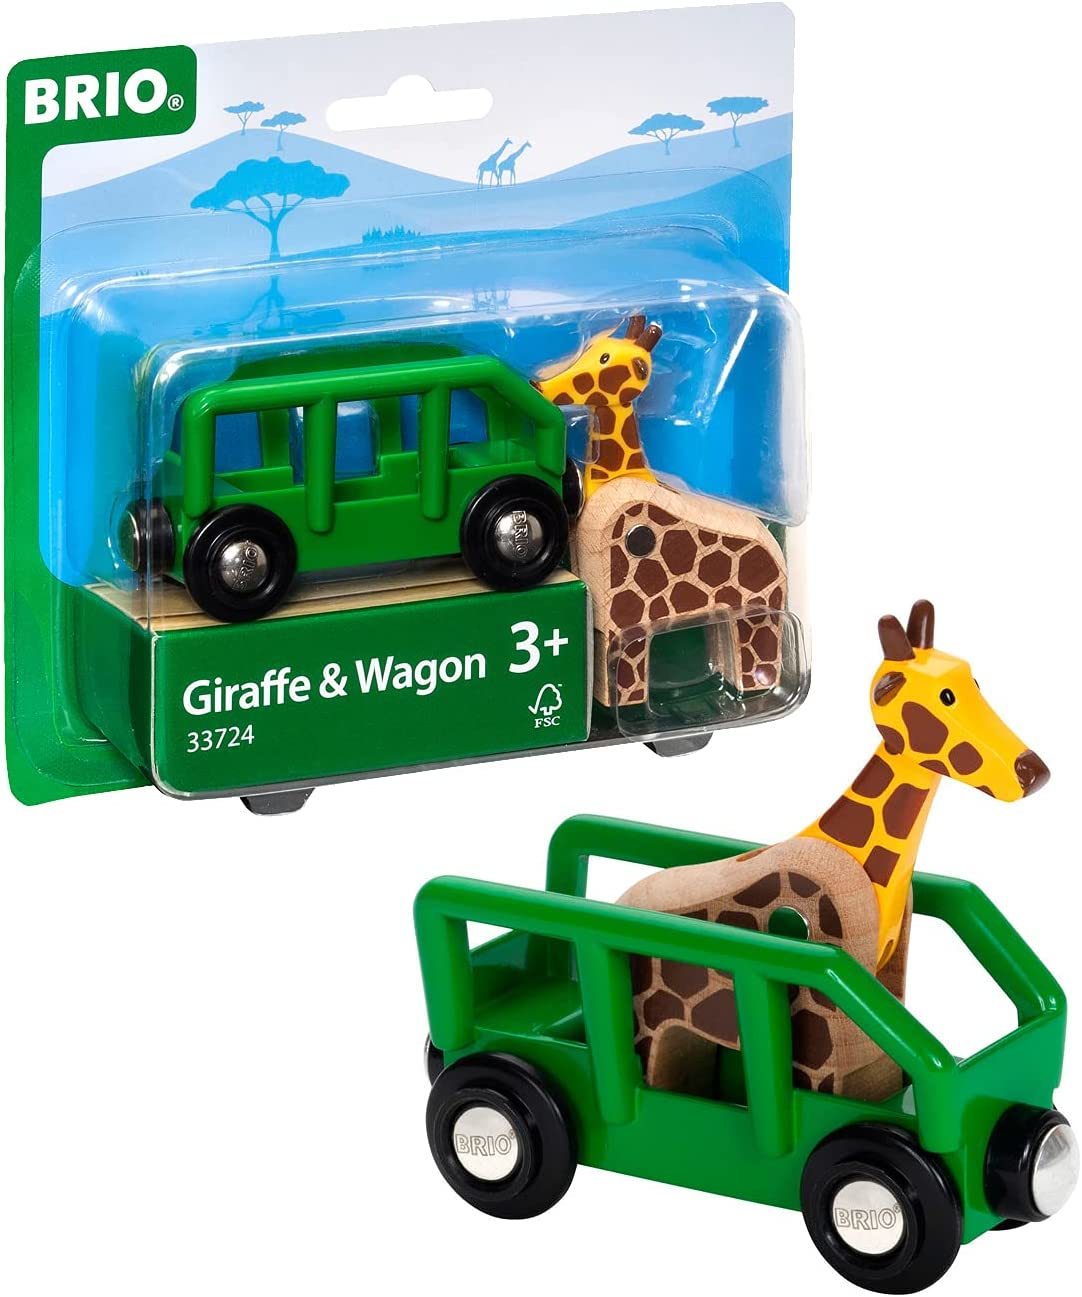 Brio World Giraffe and Wagon 33724